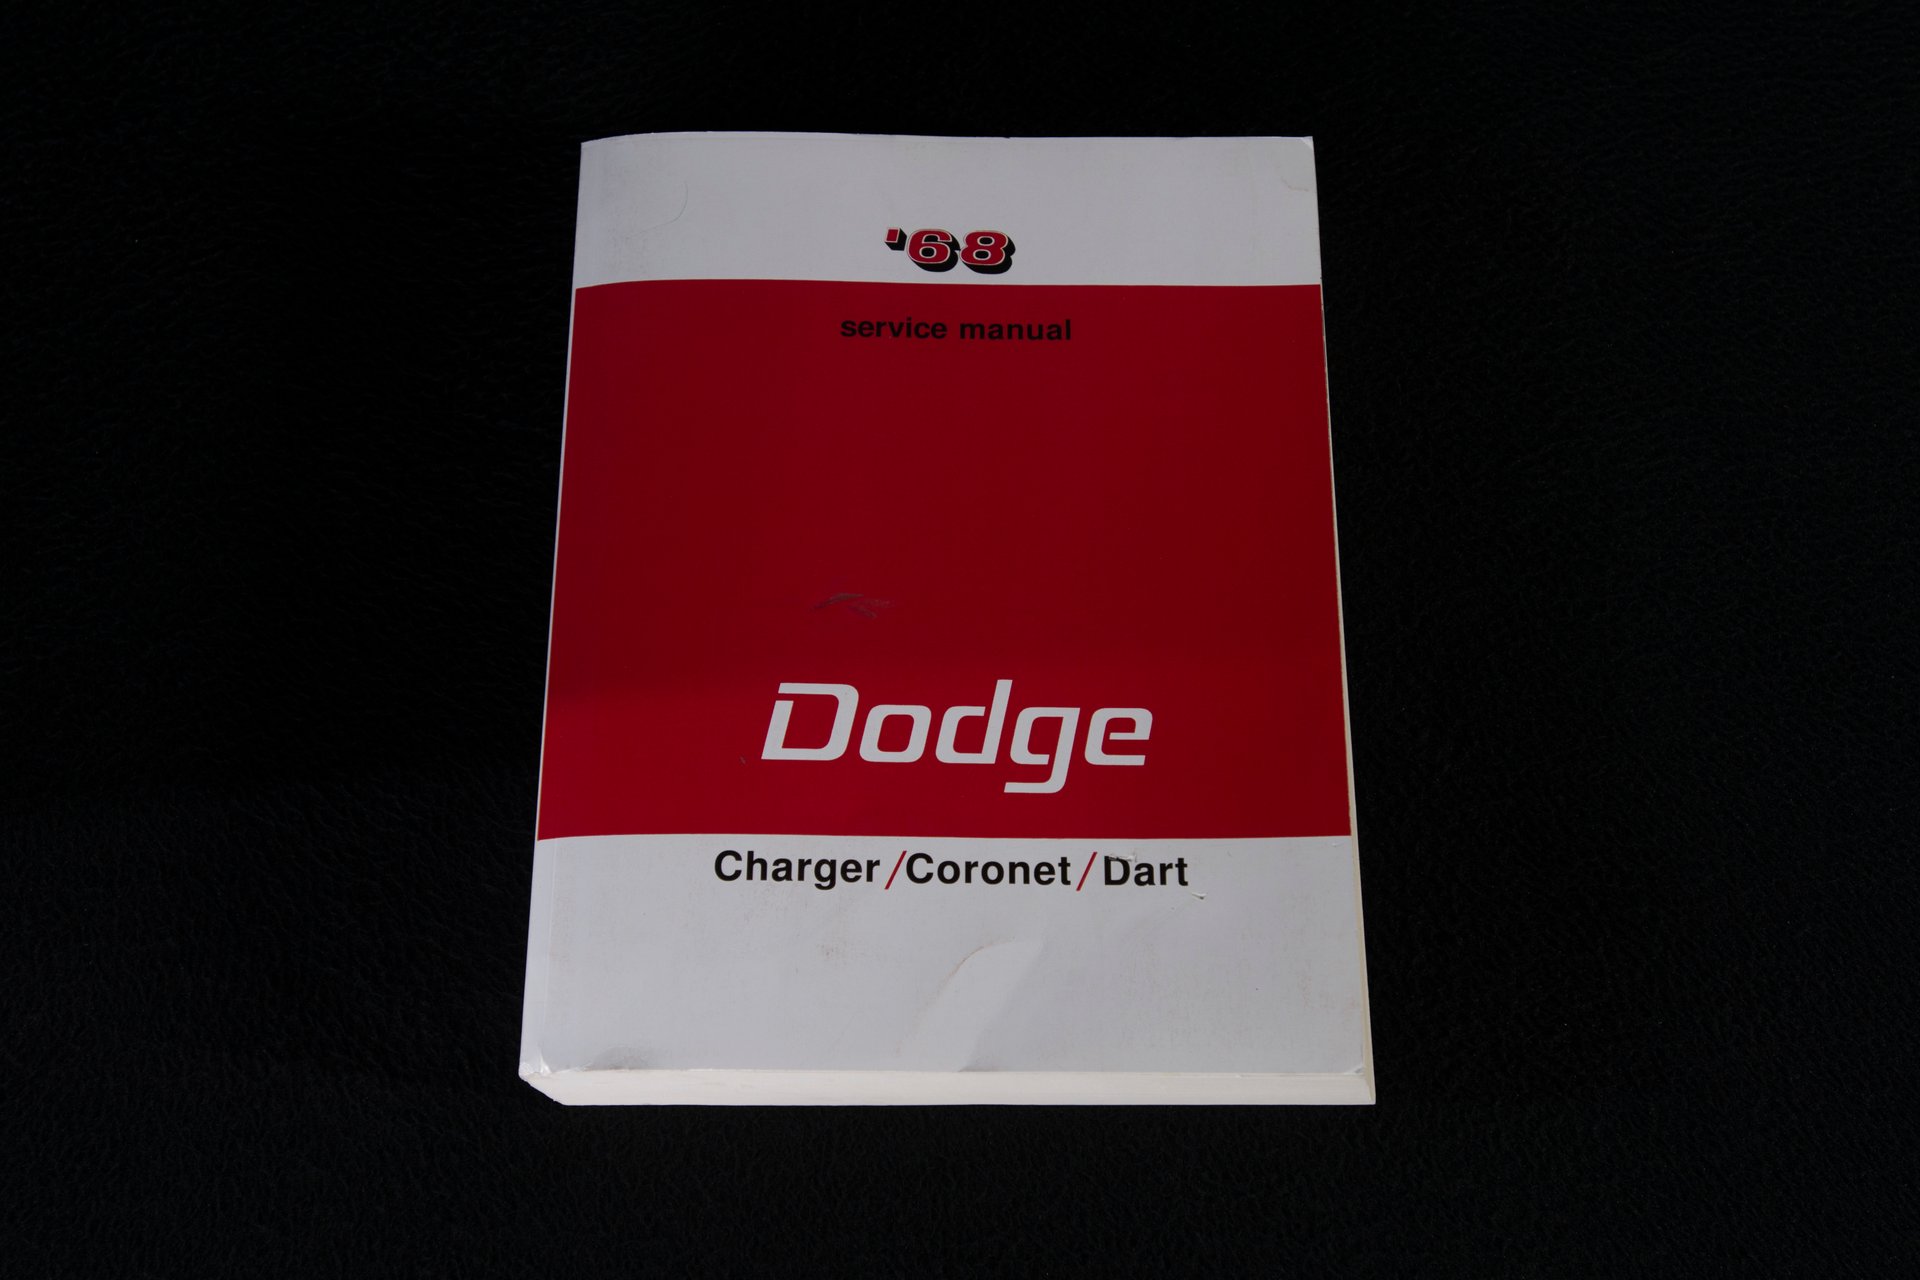 For Sale 1968 Dodge Dart